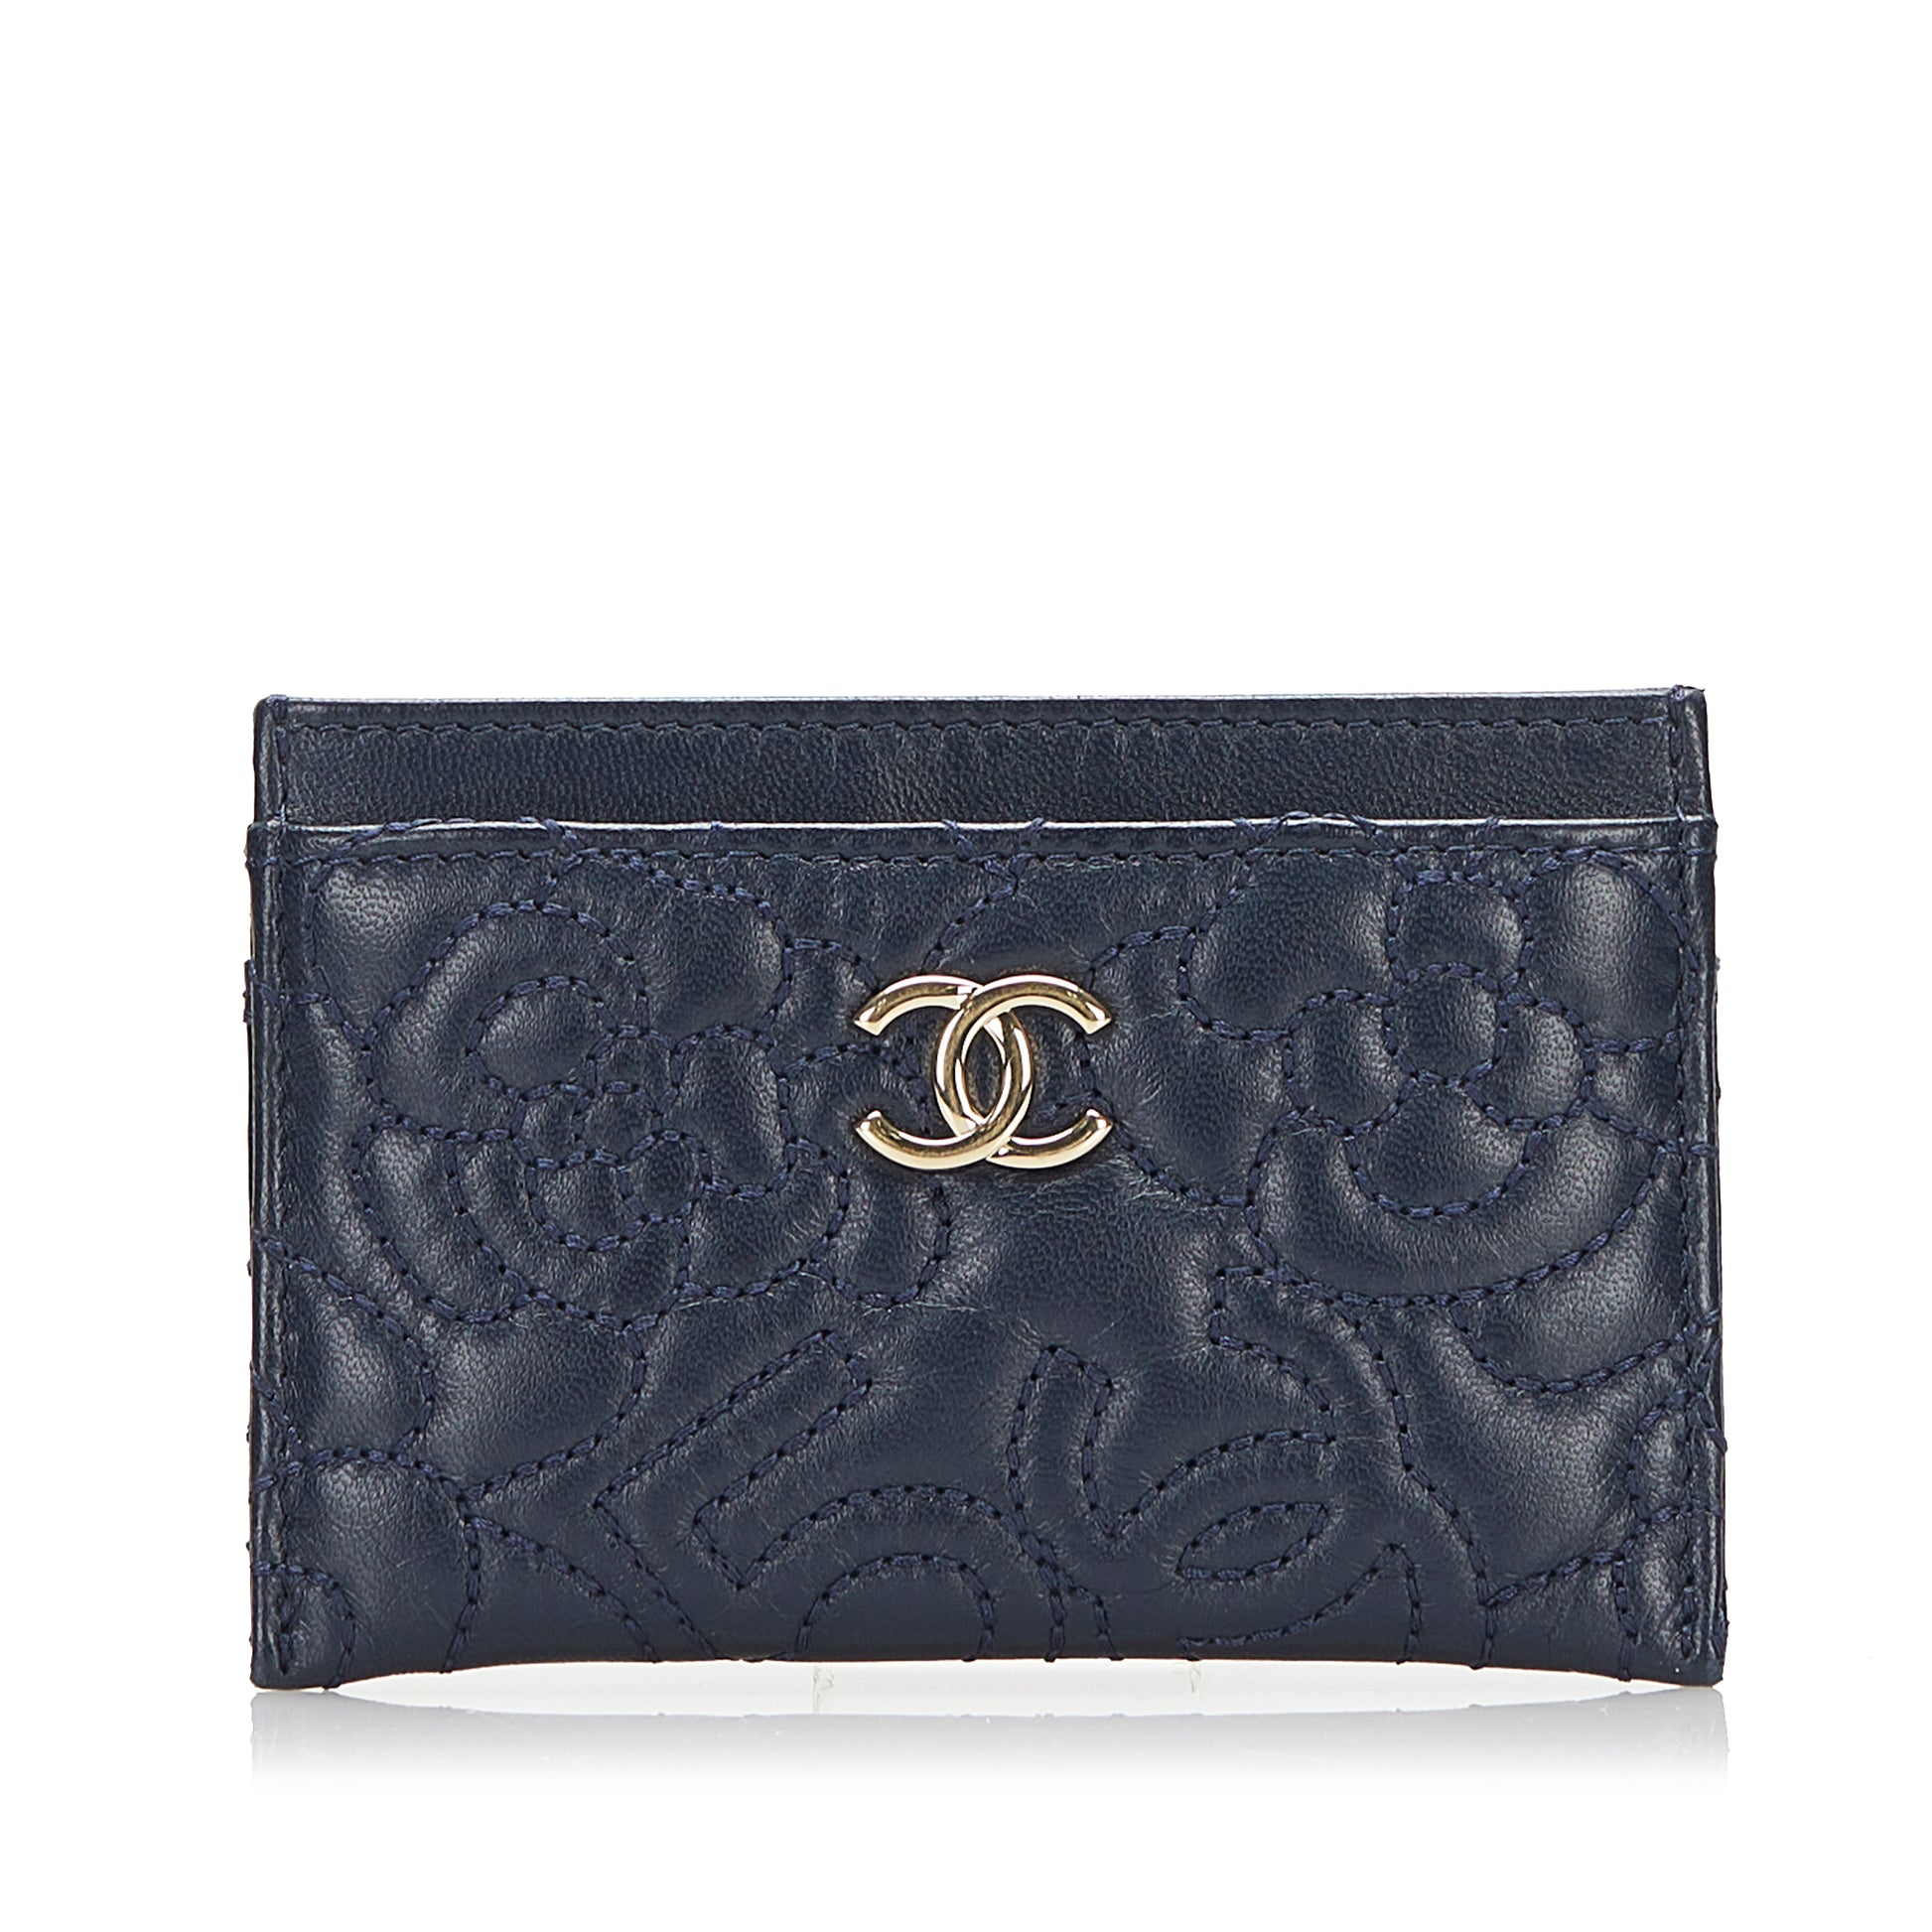 Chanel CC Camellia Card Holder